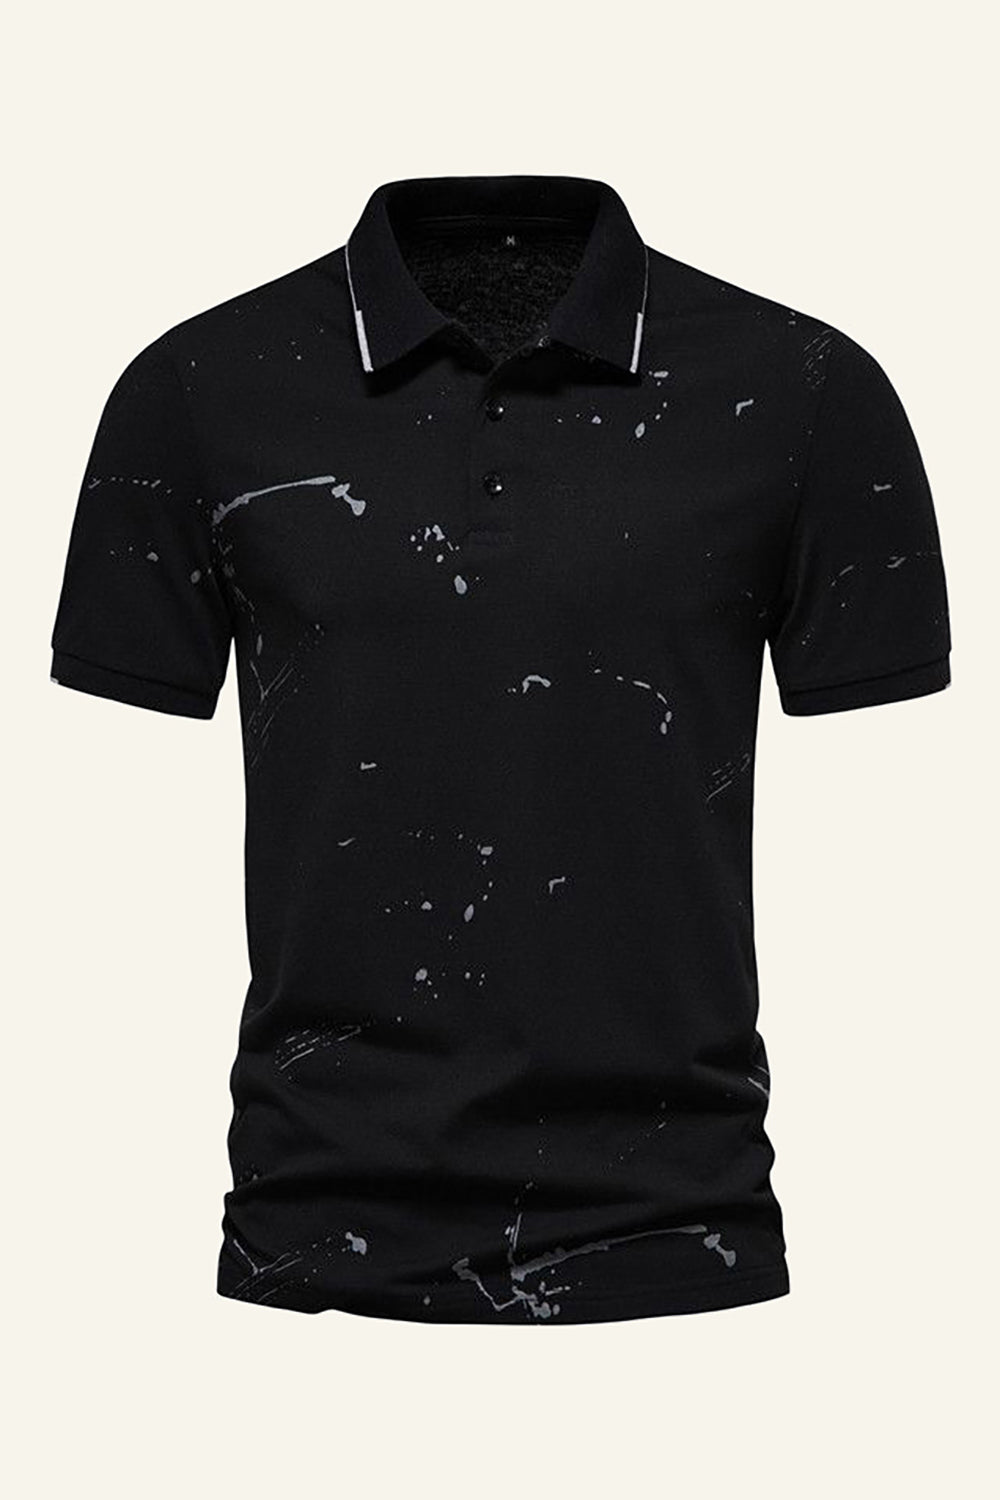 Black Printed Short Sleeves Men Polo Shirt